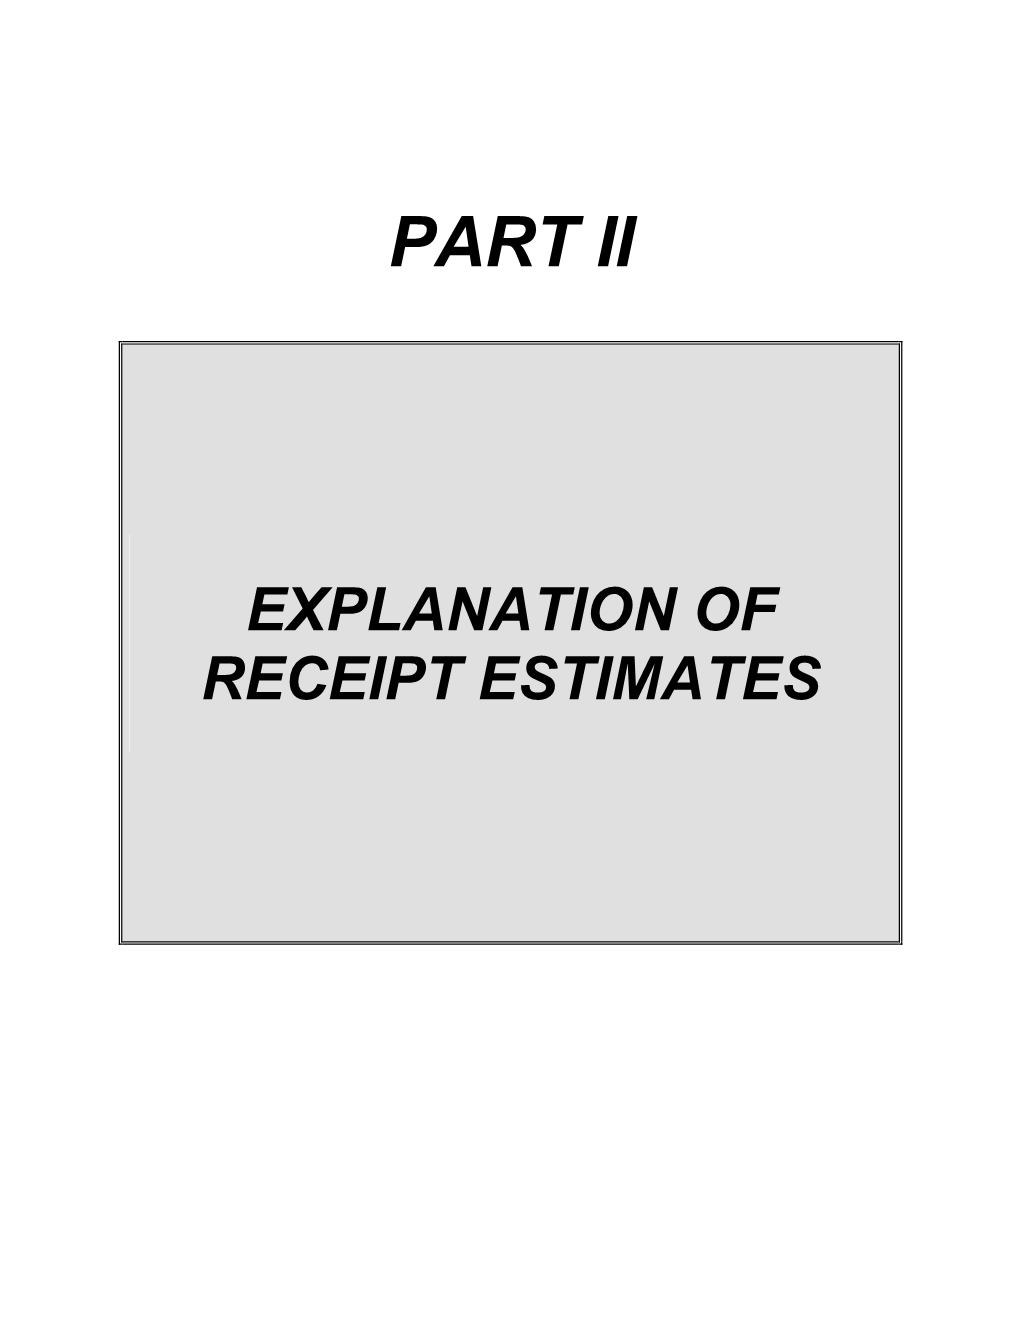 Part II – Explanation of Receipt Estimates